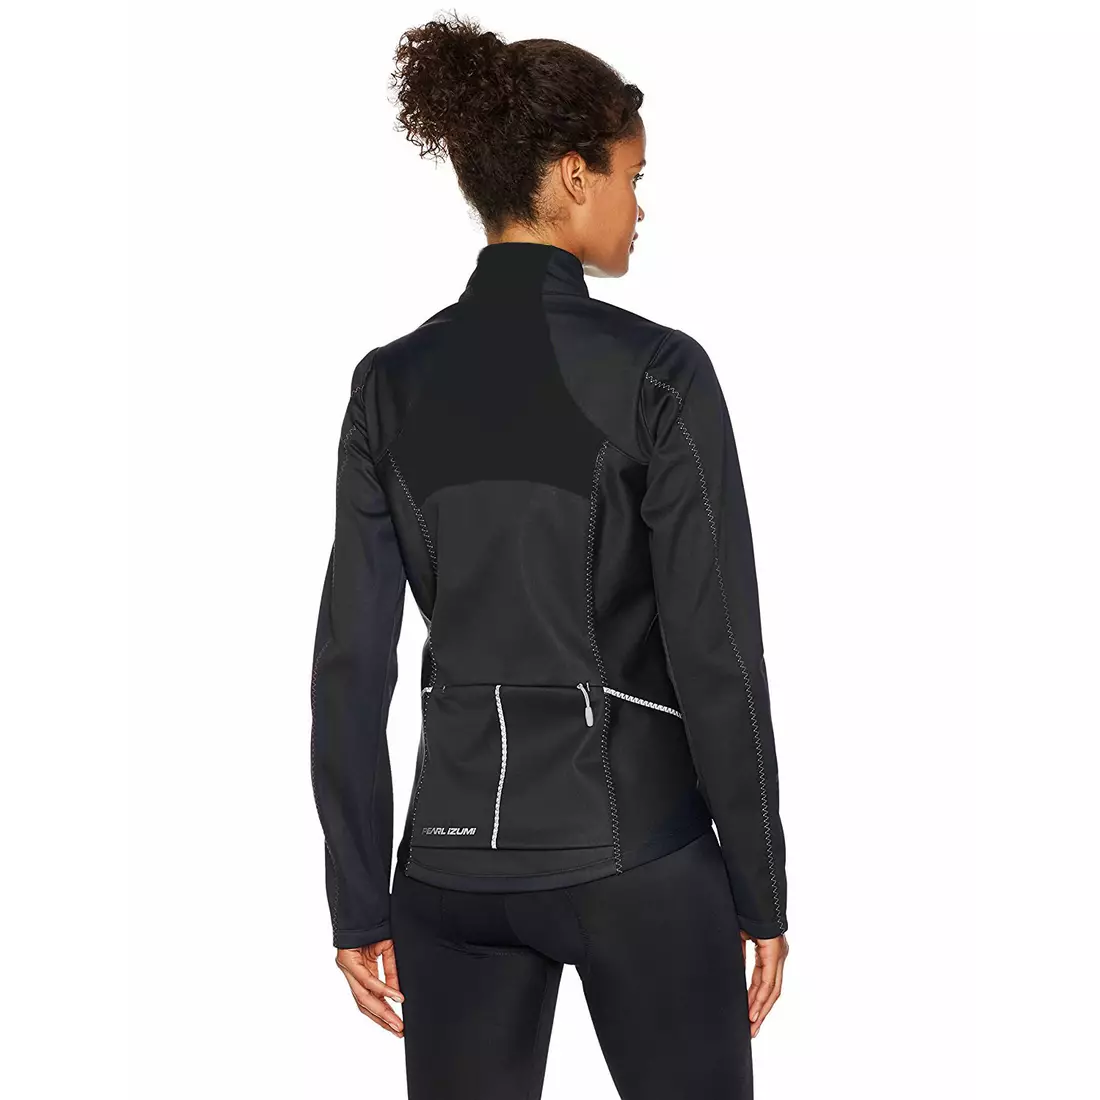 PEARL IZUMI SELECT ESCAPE - women's winter softshell cycling jacket, black 11231702-021